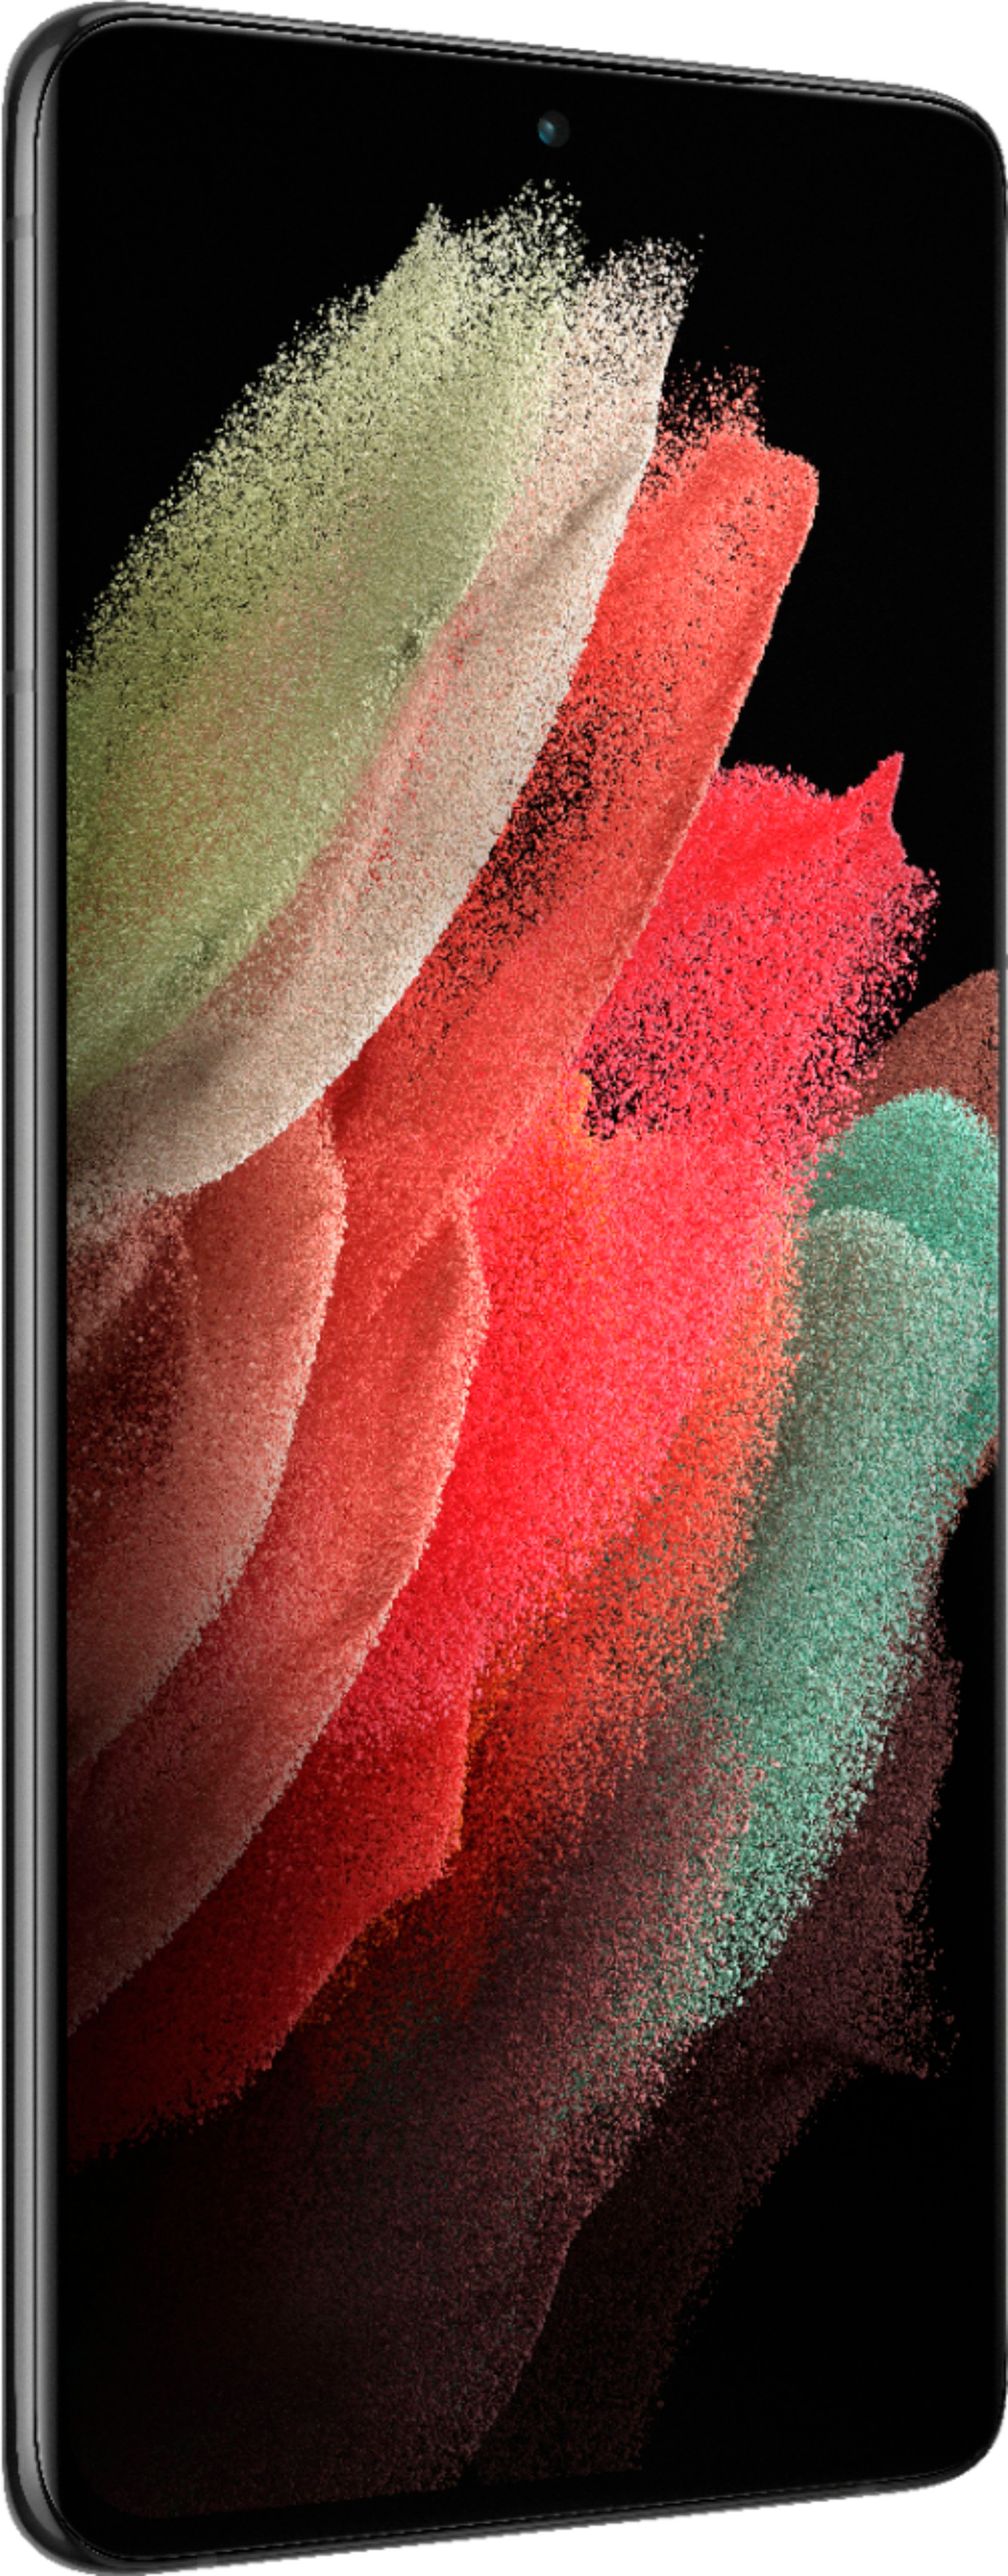 Samsung Galaxy S21 Ultra 256GB Phantom Black Very Good